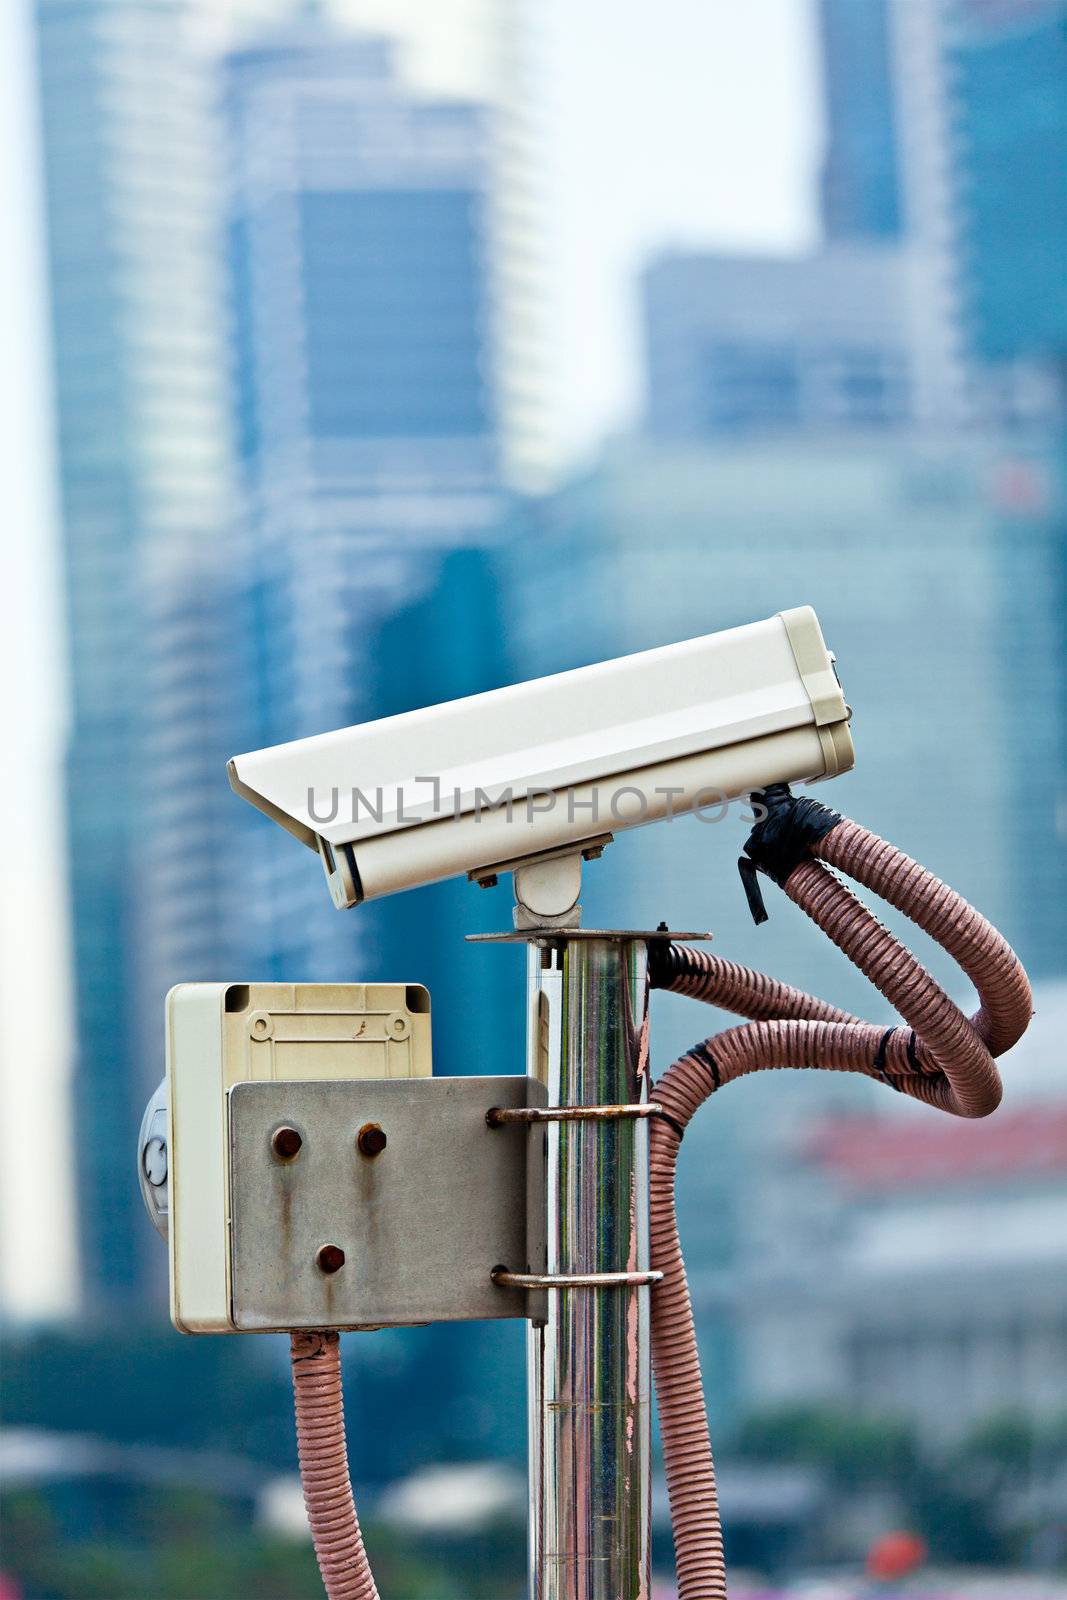 CCTV surveillance camera in Singapore by dimol